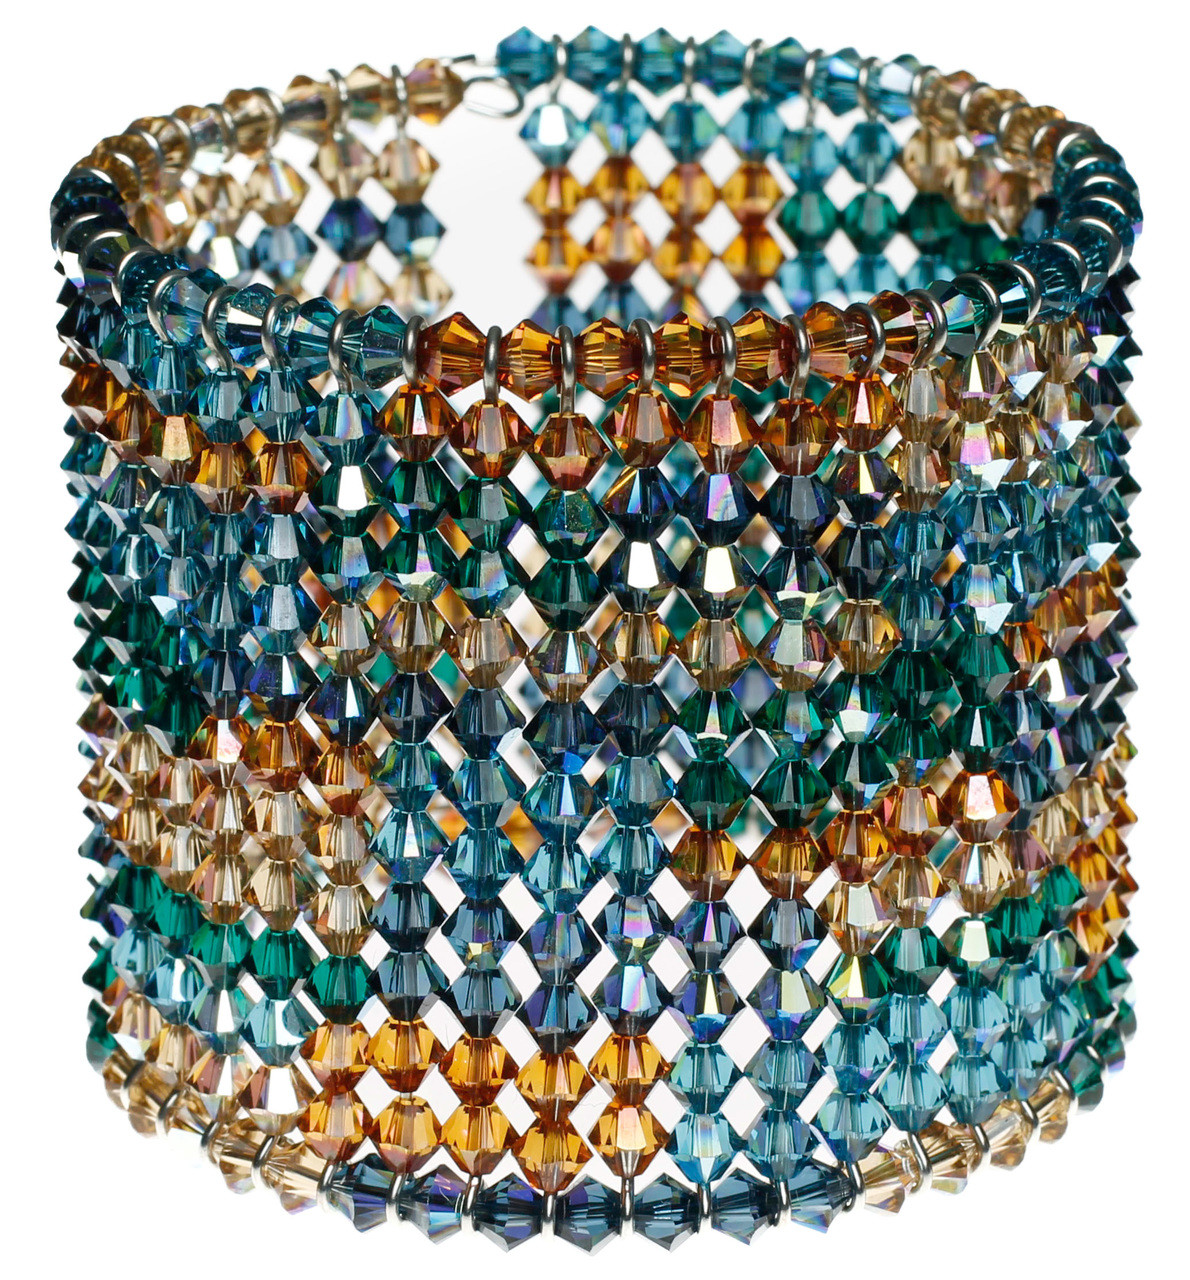 Patchwork cuff bracelet • Swarovski crystal jewelry • Colorful designs by  Karen Curtis NYC